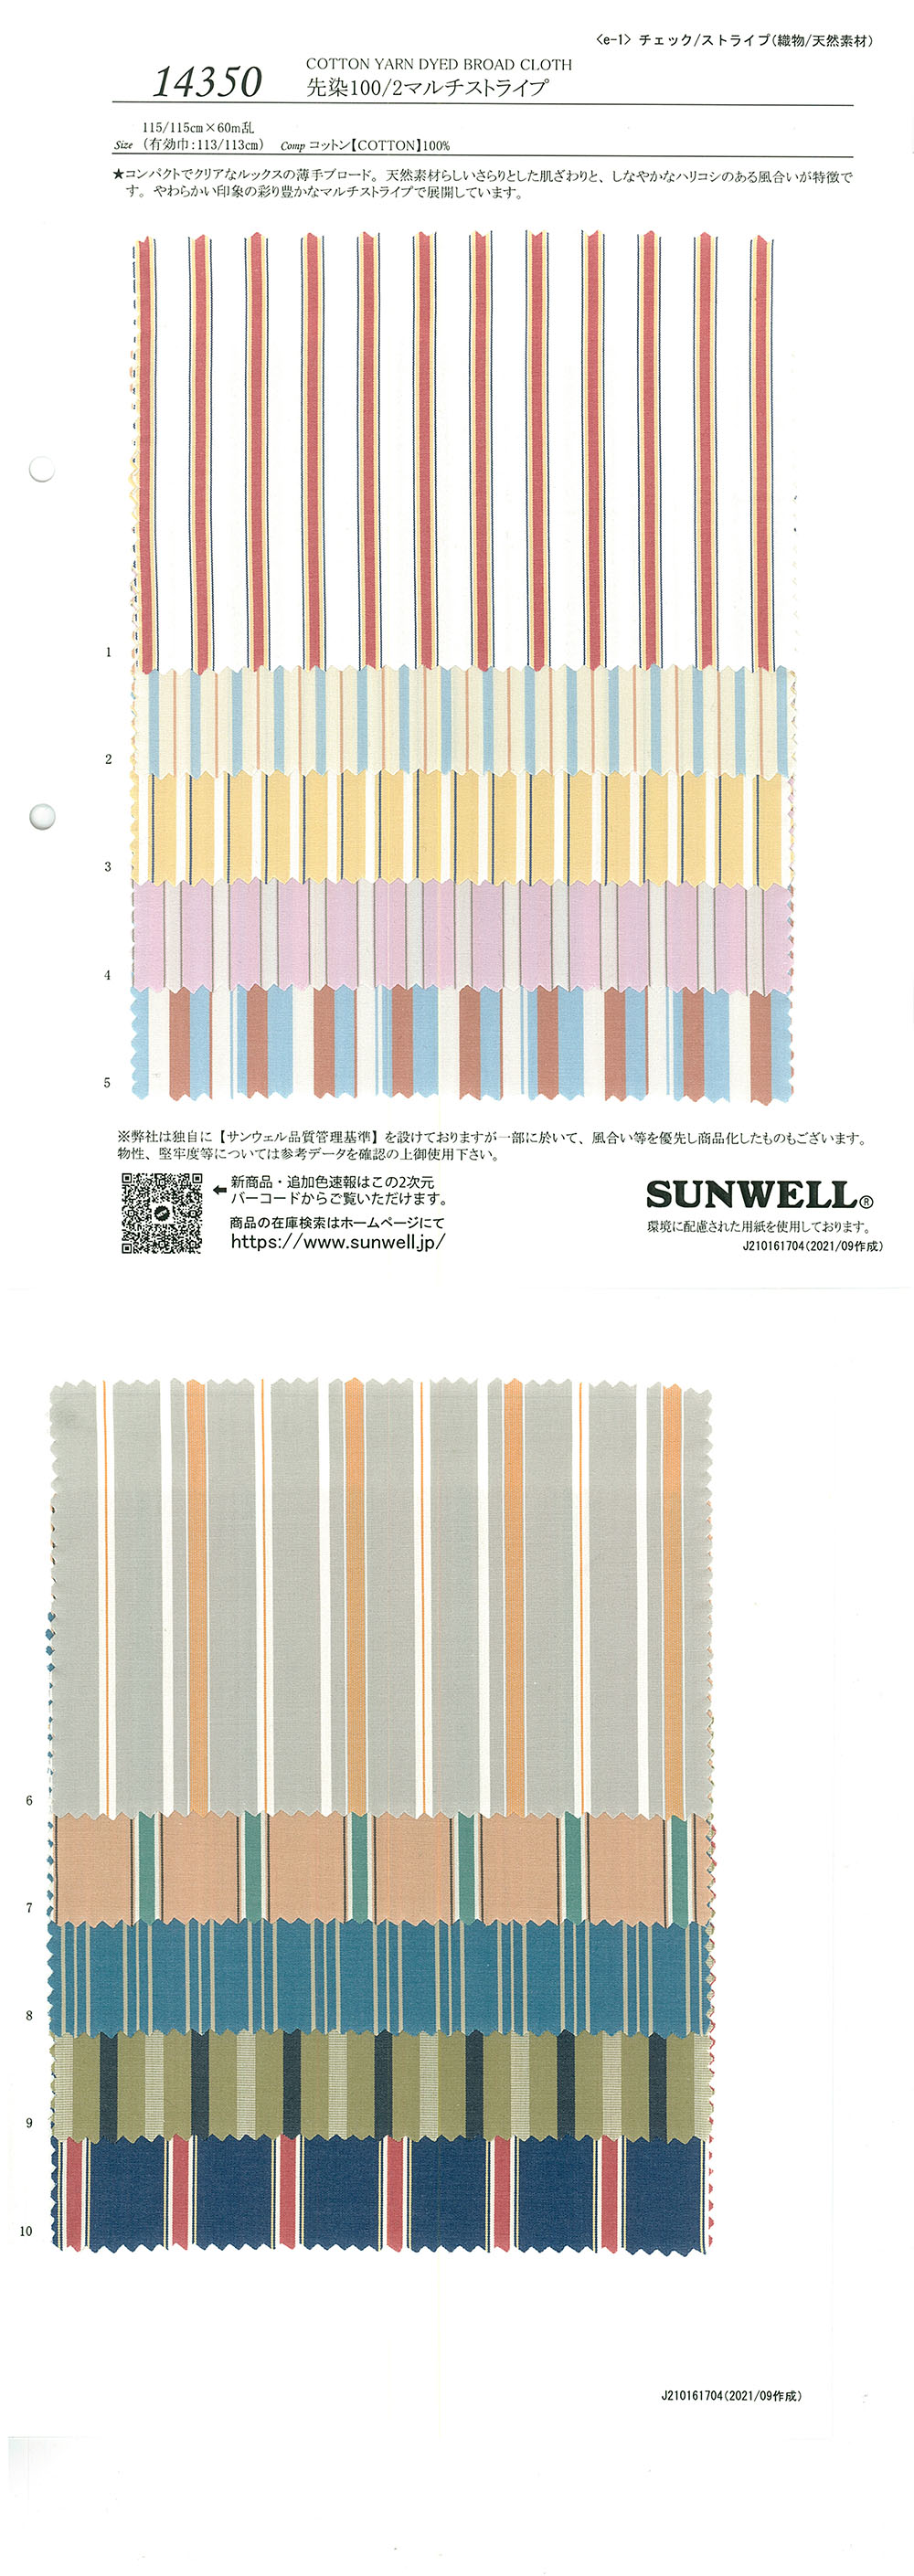 14350 Fils Teints 100/2 Multi-rayures[Fabrication De Textile] SUNWELL